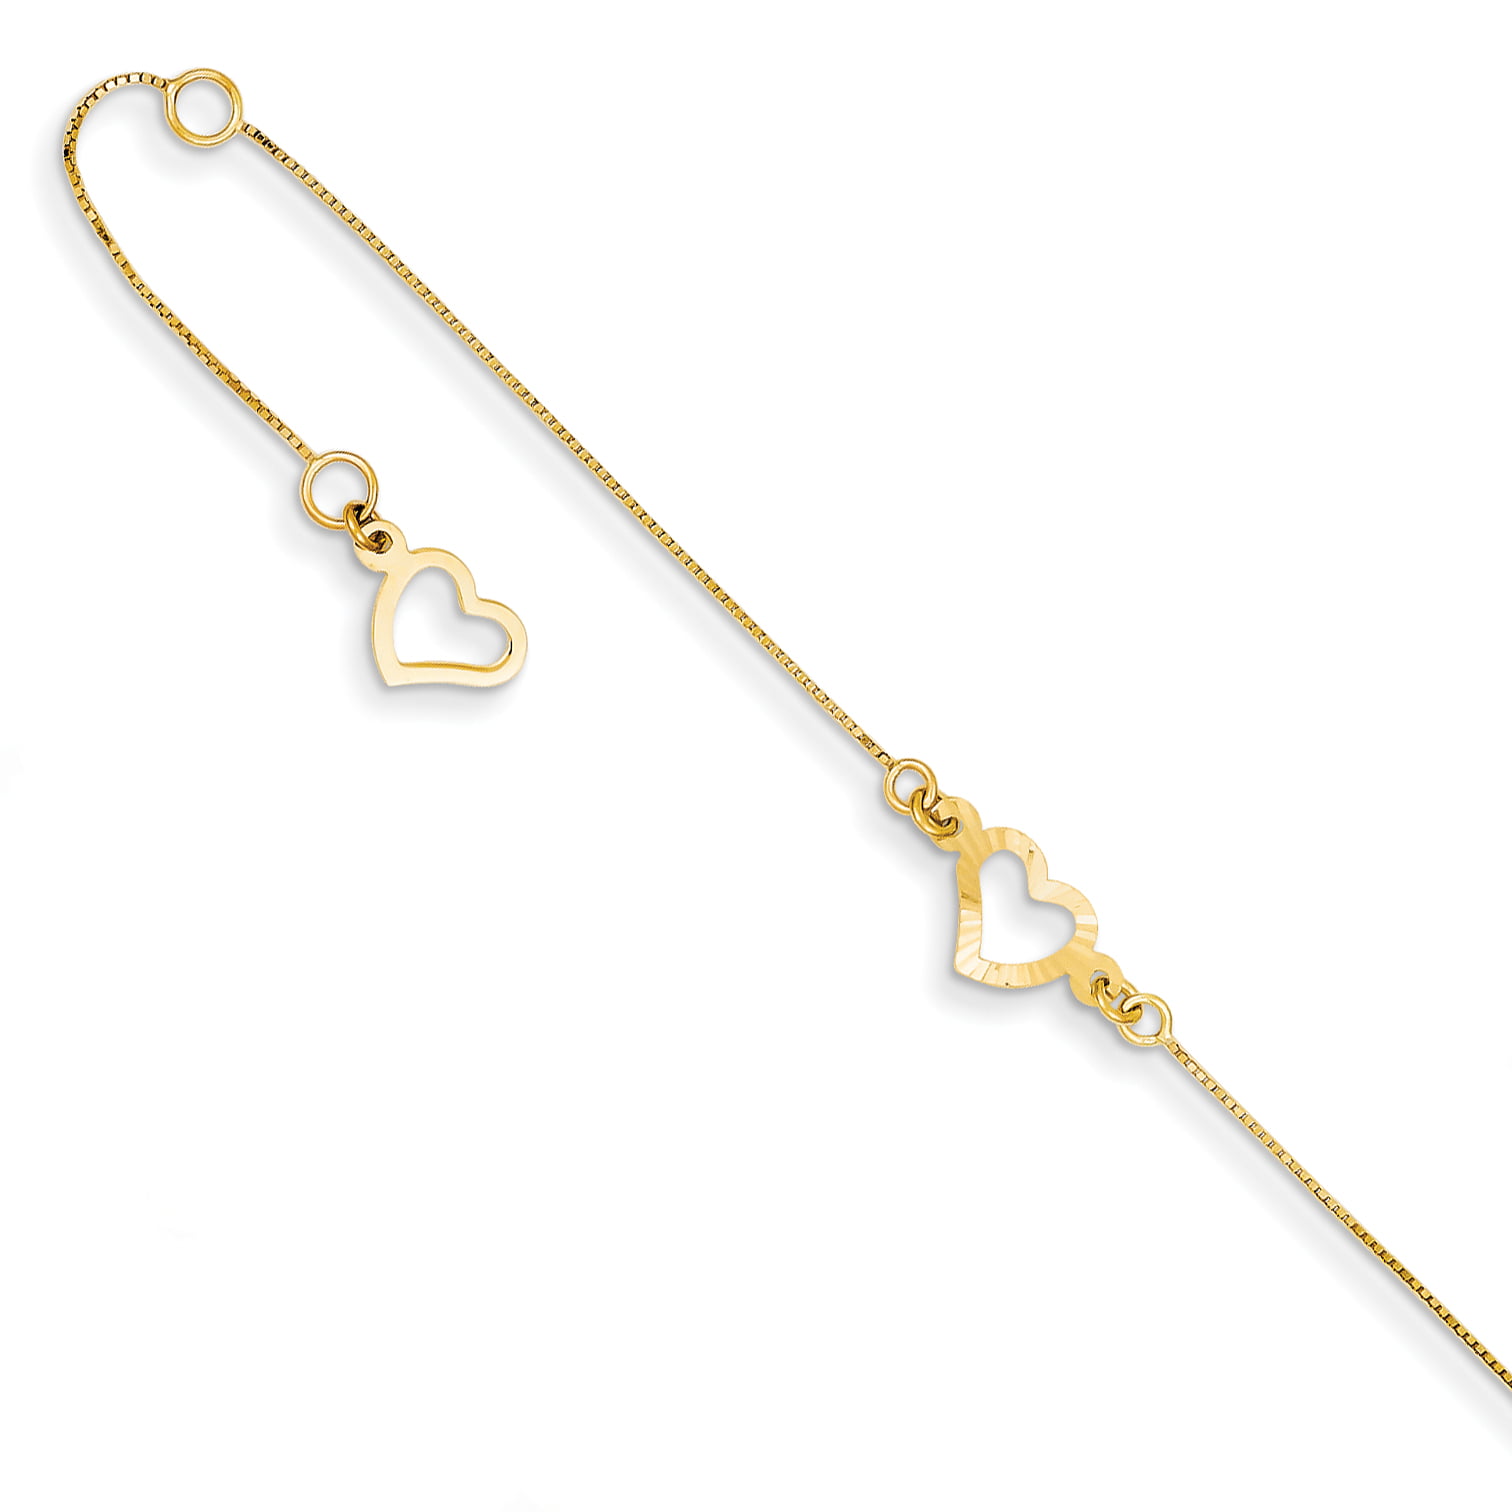 Ankle Bracelet Thin Swirl Design Gold Filled 9 3/4 inch Long Anklet  # 1